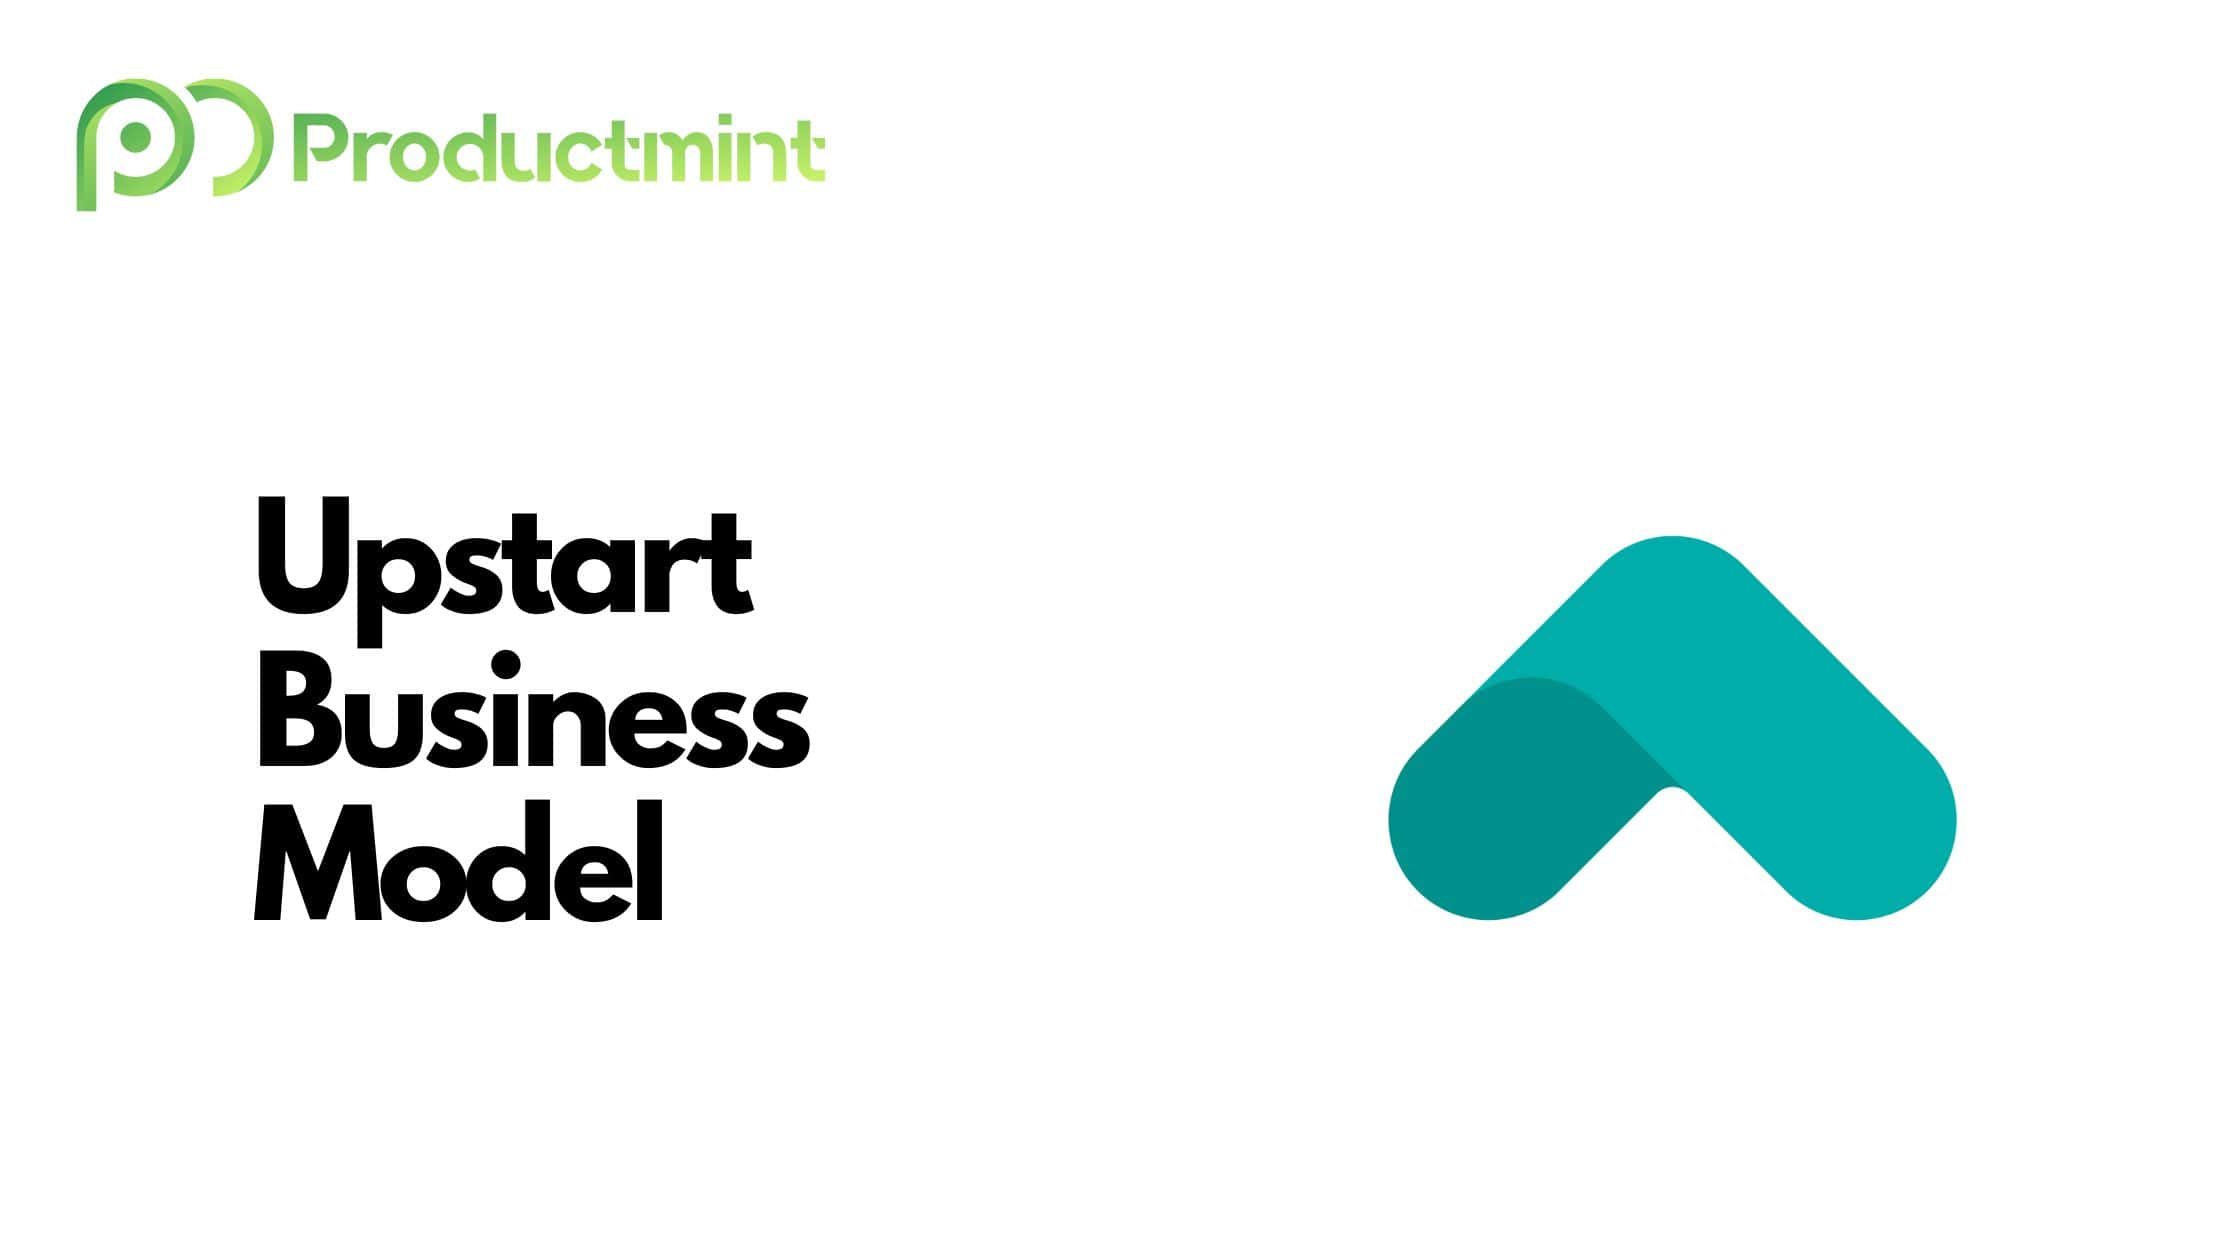 Upstart Business Model